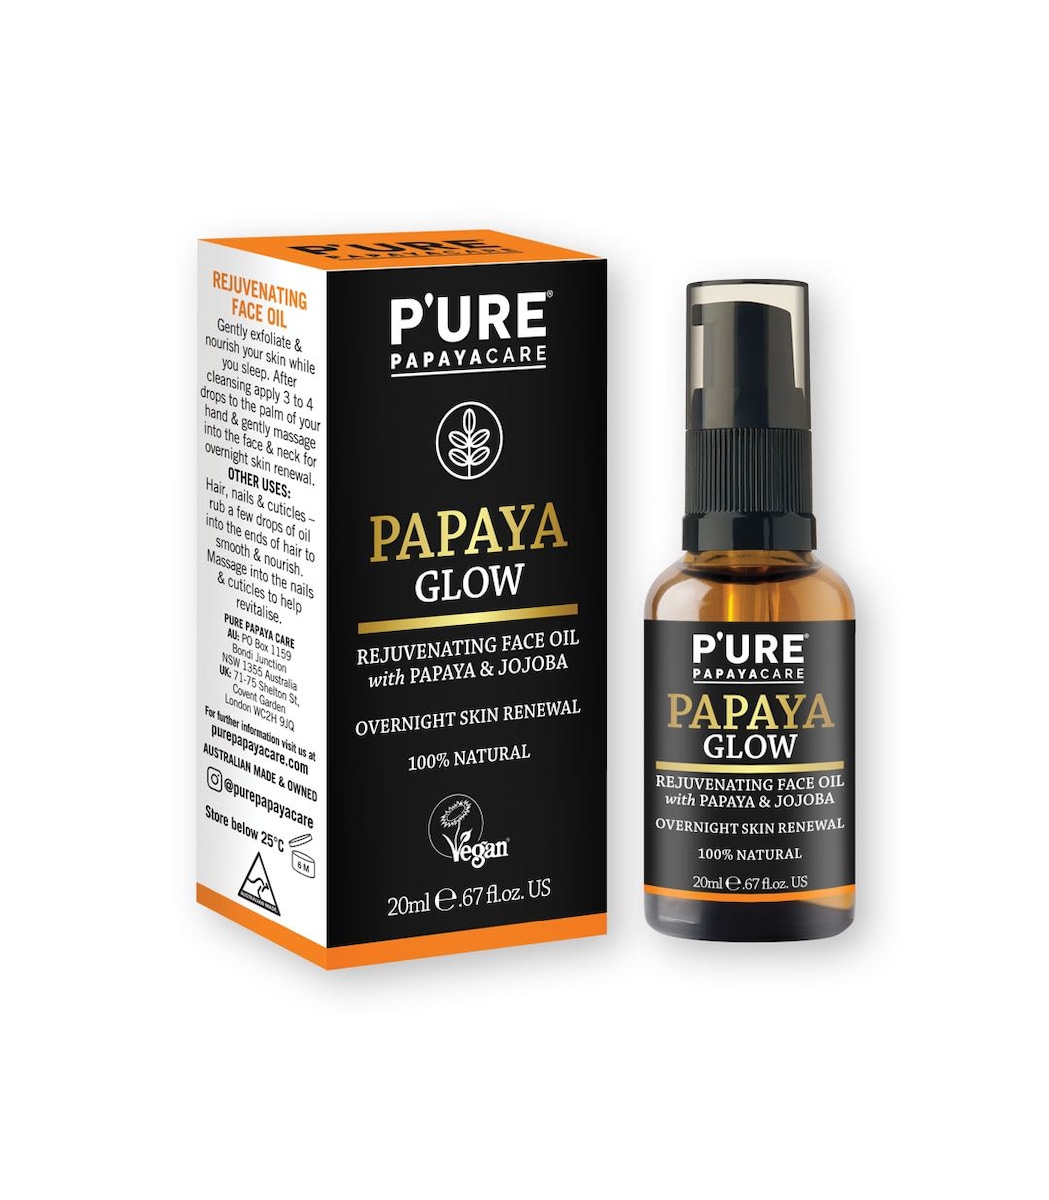 P'URE Papayacare Papaya Glow Rejuvinating Face Oil 20ml